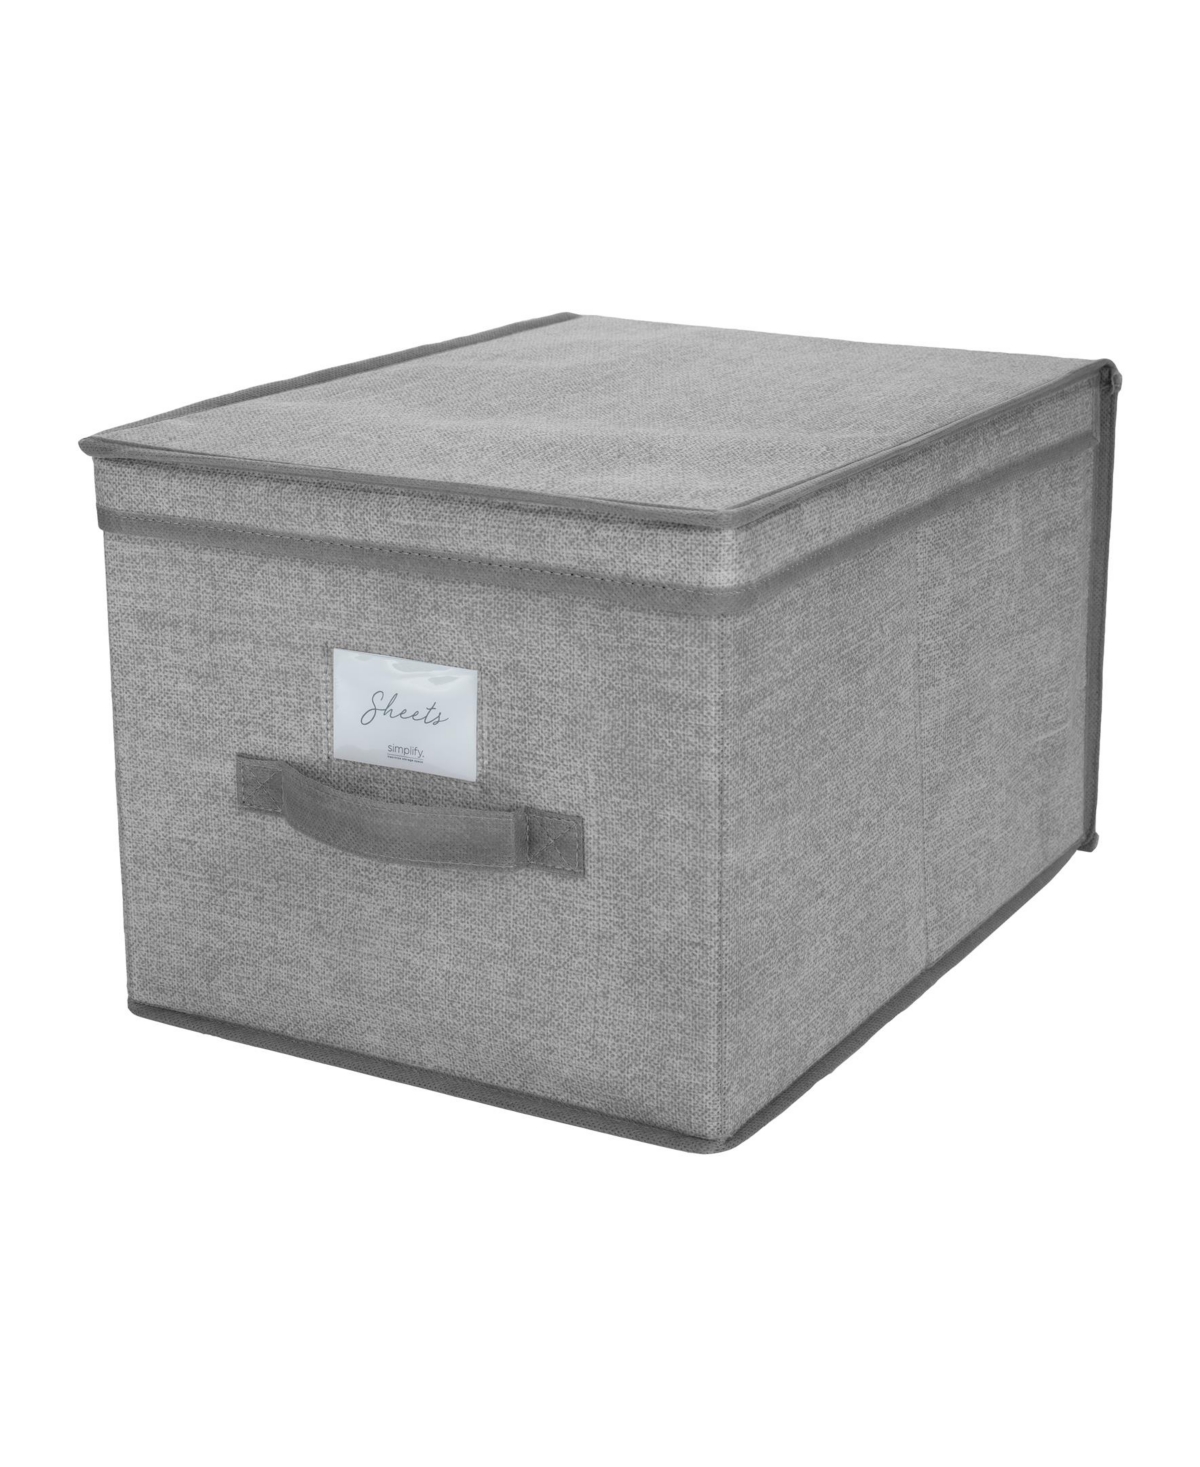 Large Storage Box - Gray